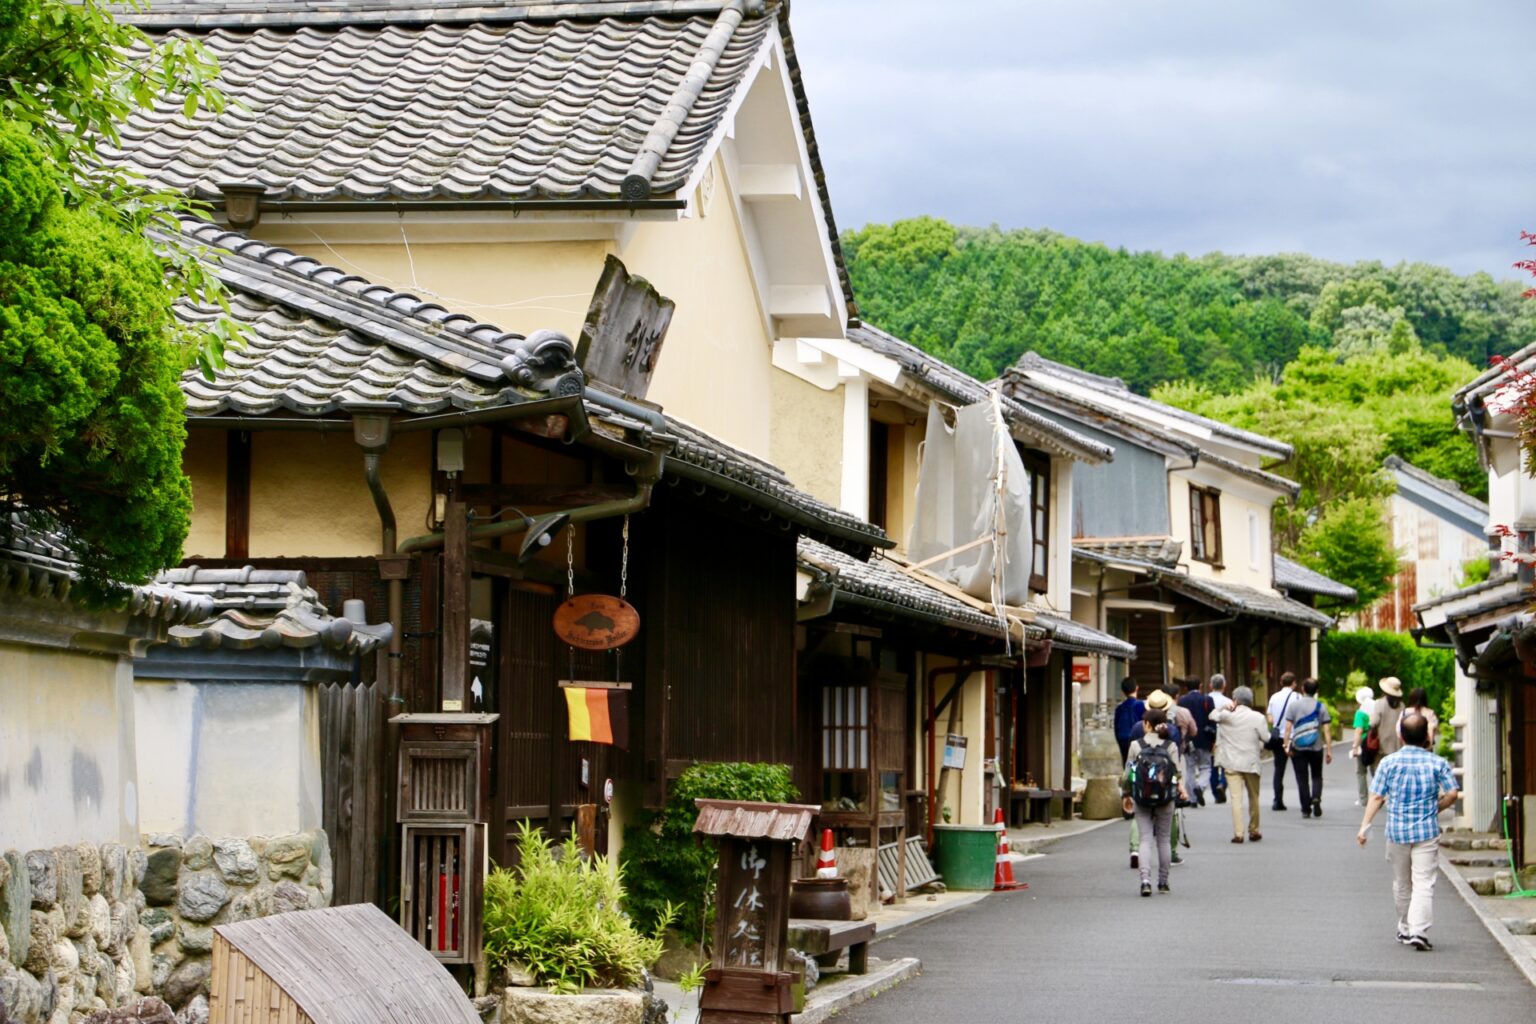 Picturesque Traditional Villages in Japan | Japan Wonder Travel Blog